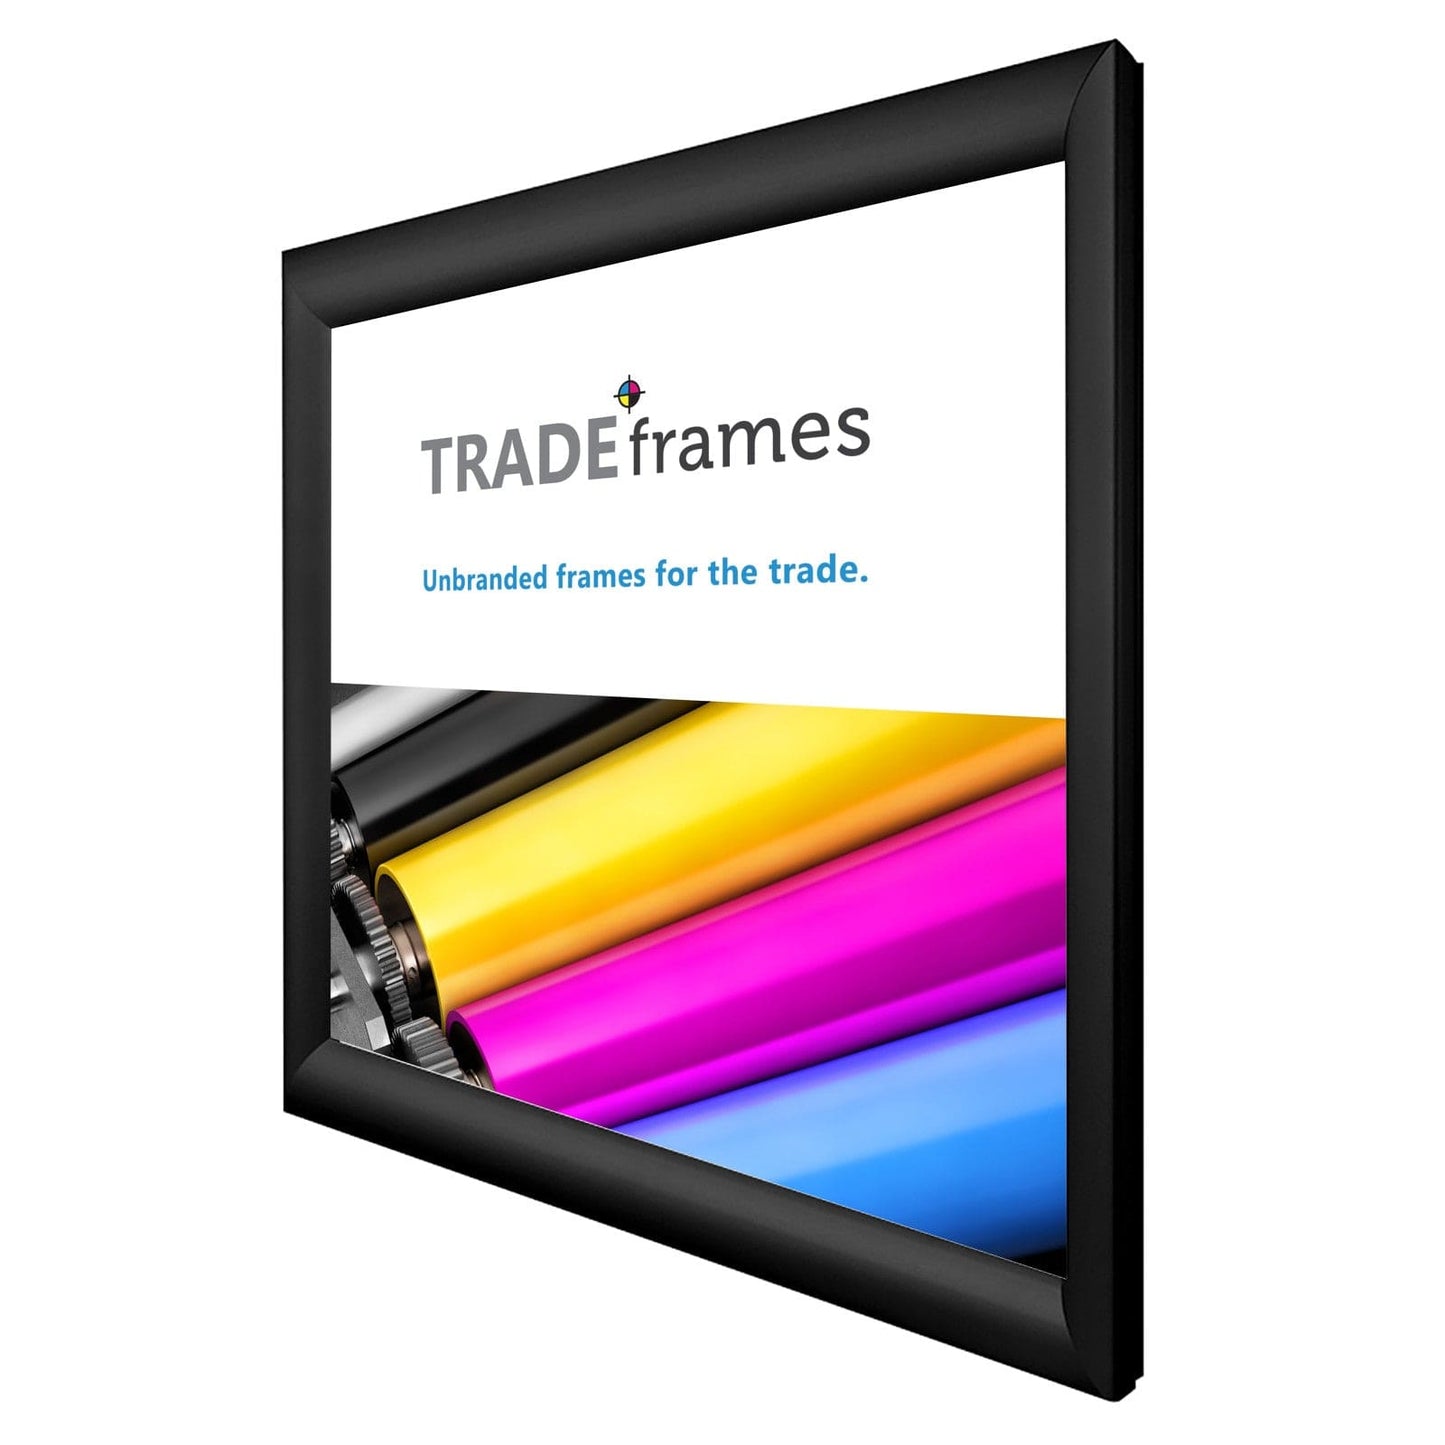 18x18 TRADEframe Black Snap Frame 18x18 - 1.2 inch profile - Snap Frames Direct